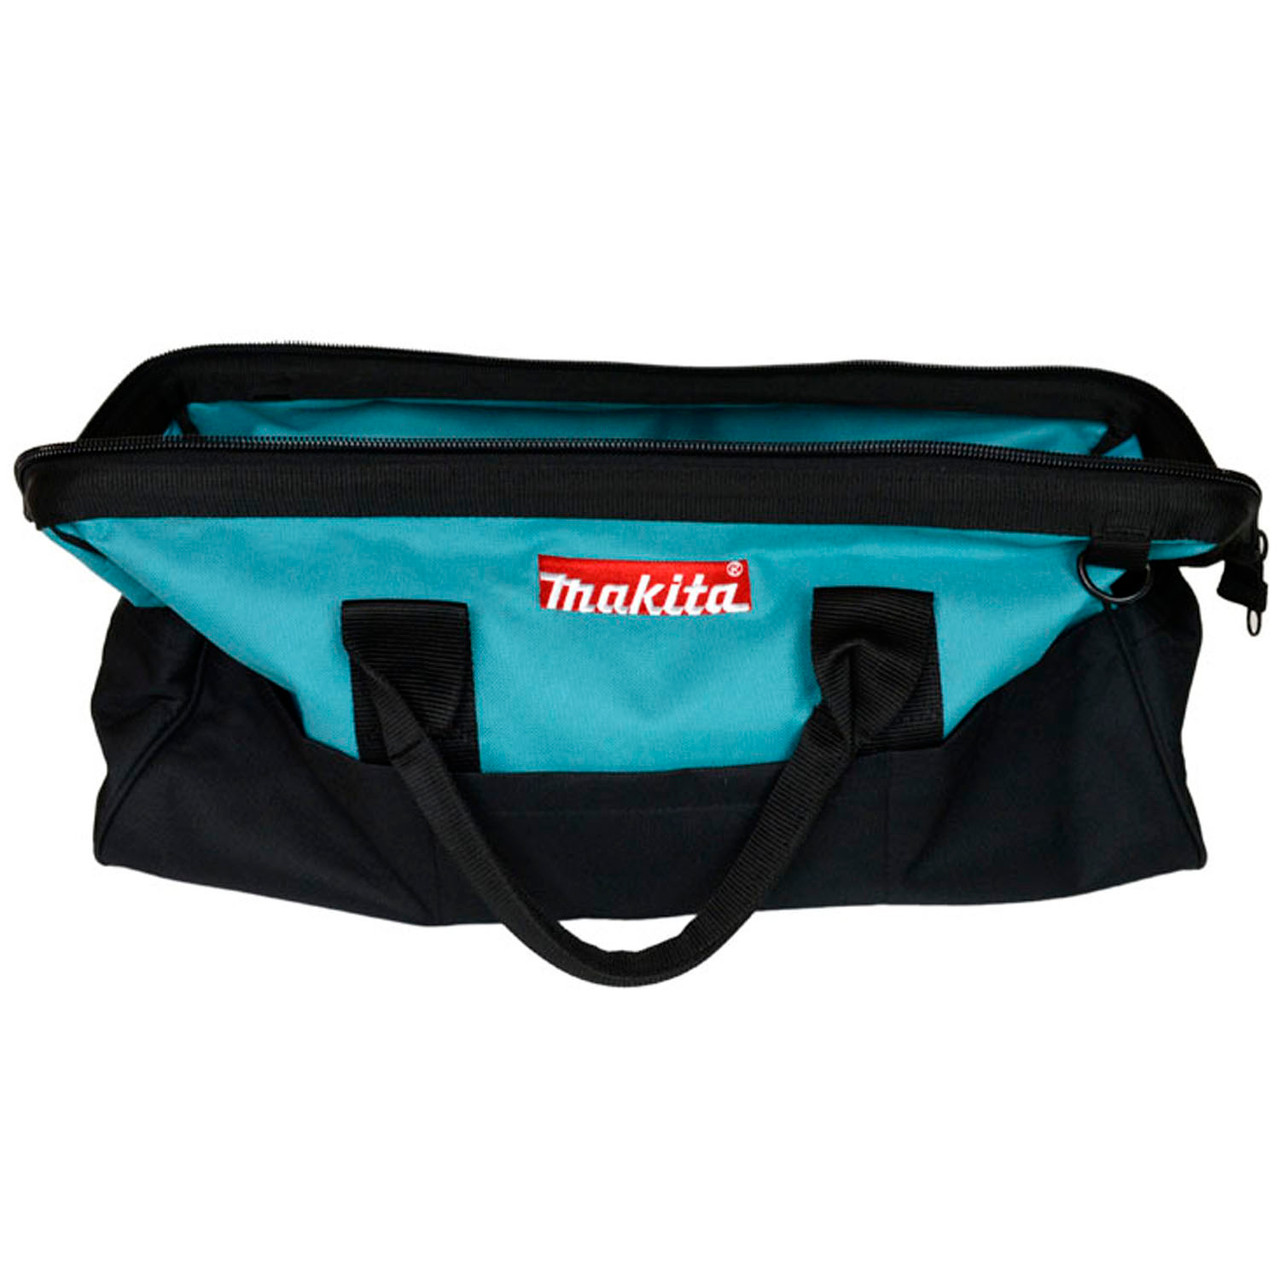 New 21”x 12” x 11” Makita Medium Heavy Duty Organizer Tool Bags 